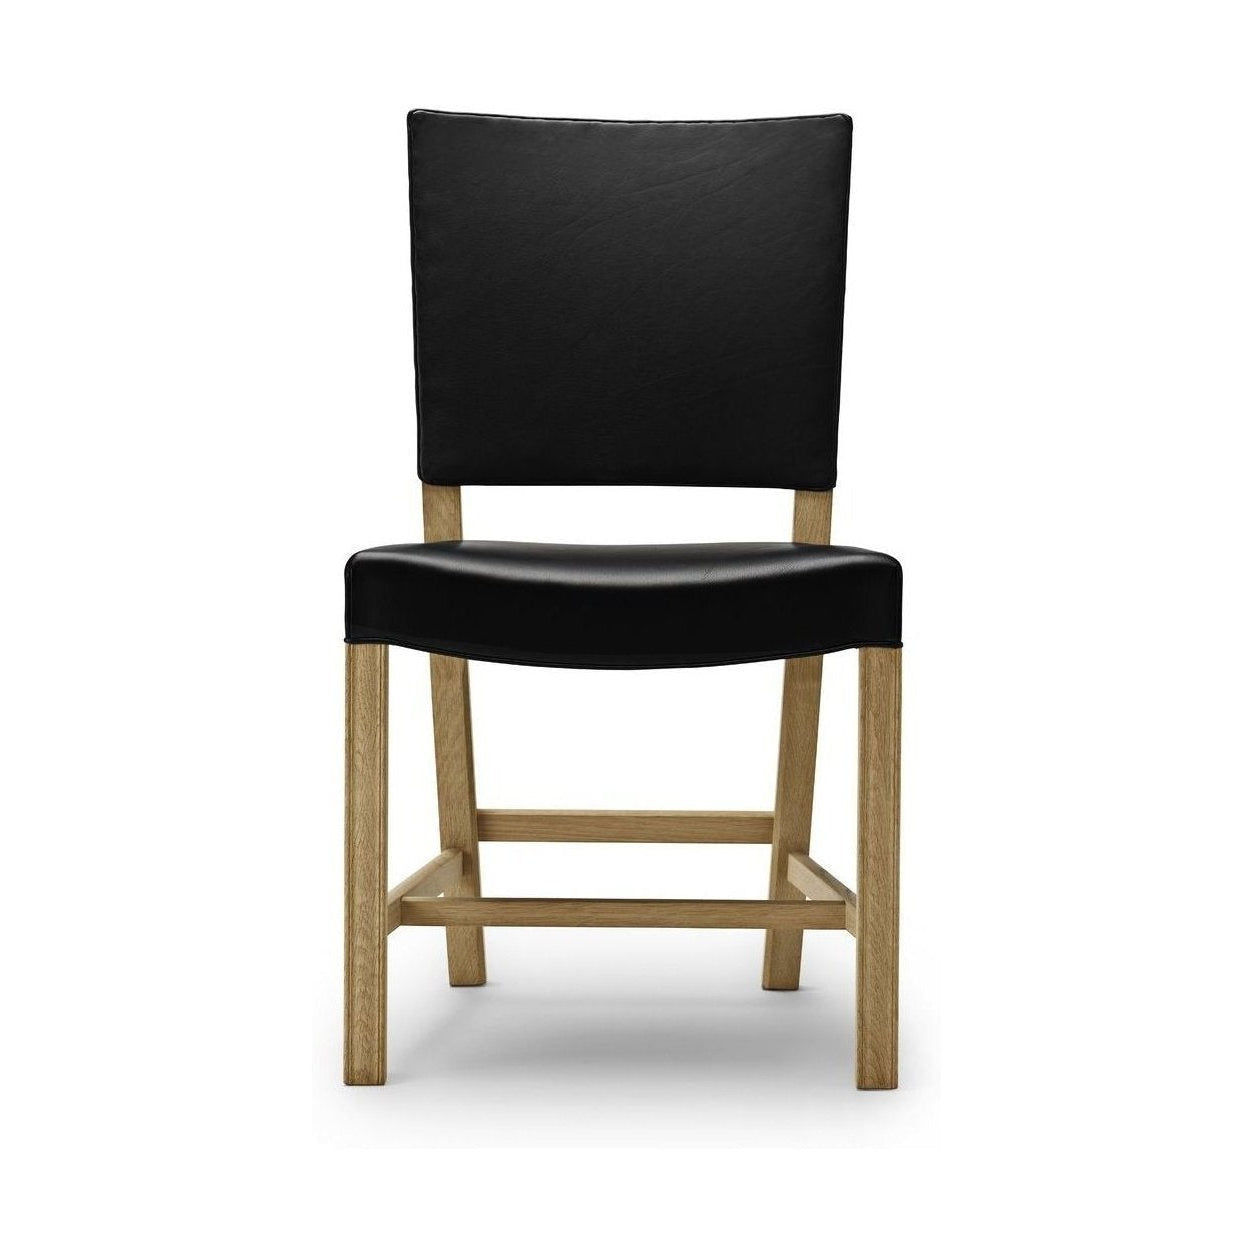 Carl Hansen KK37580 silla roja grande, roble en jabón/cuero negro